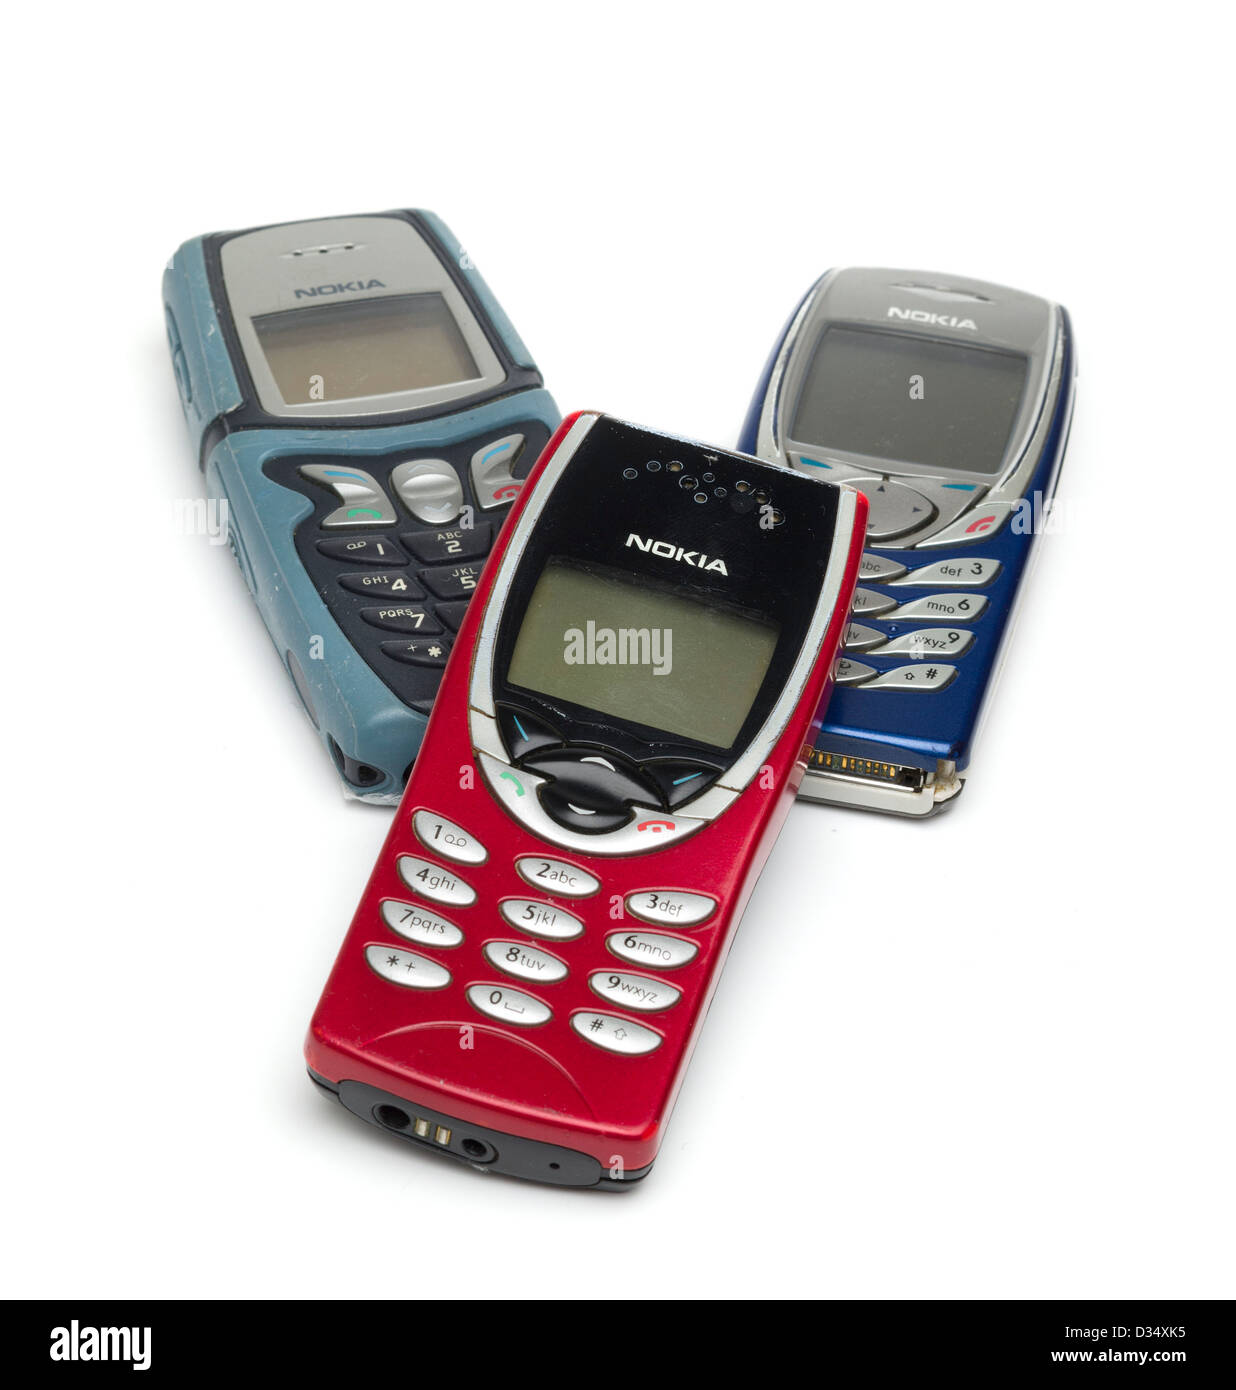 Nokia nokia phones old Immagini e Fotos Stock - Alamy